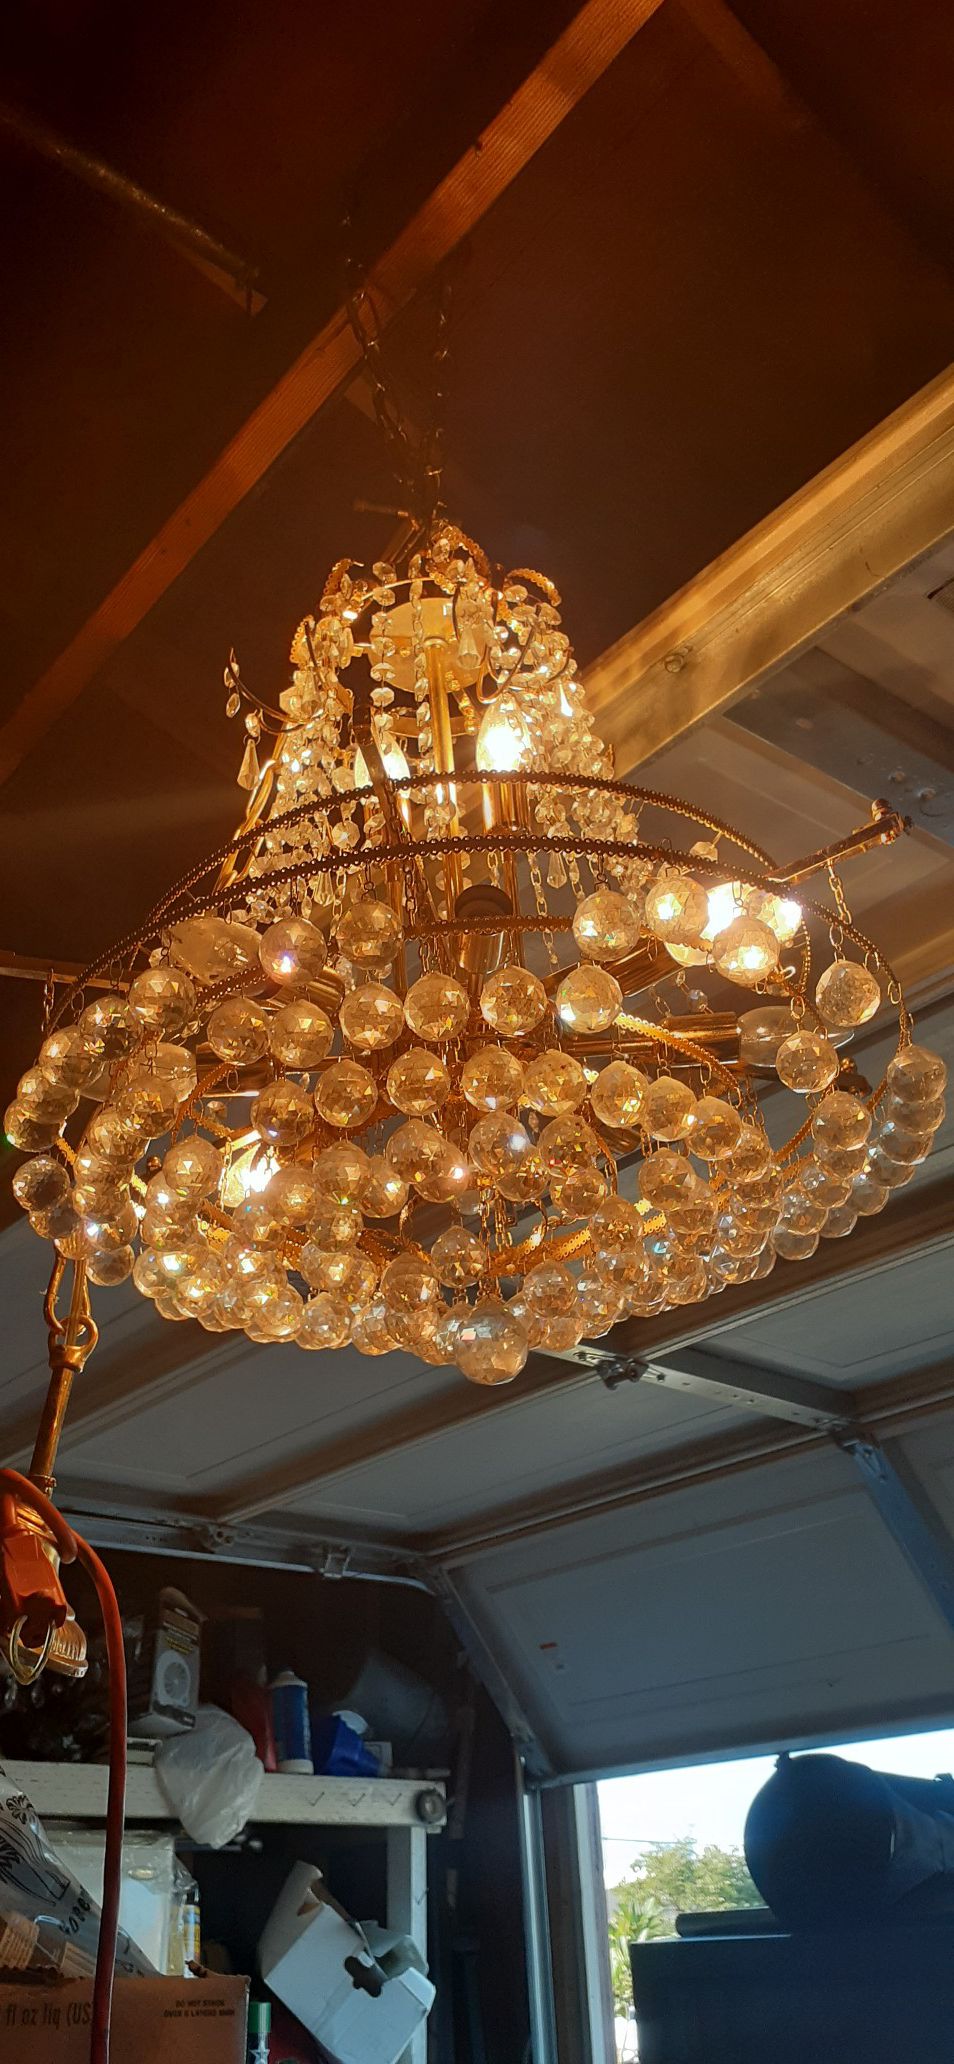 Cristal chandelier used